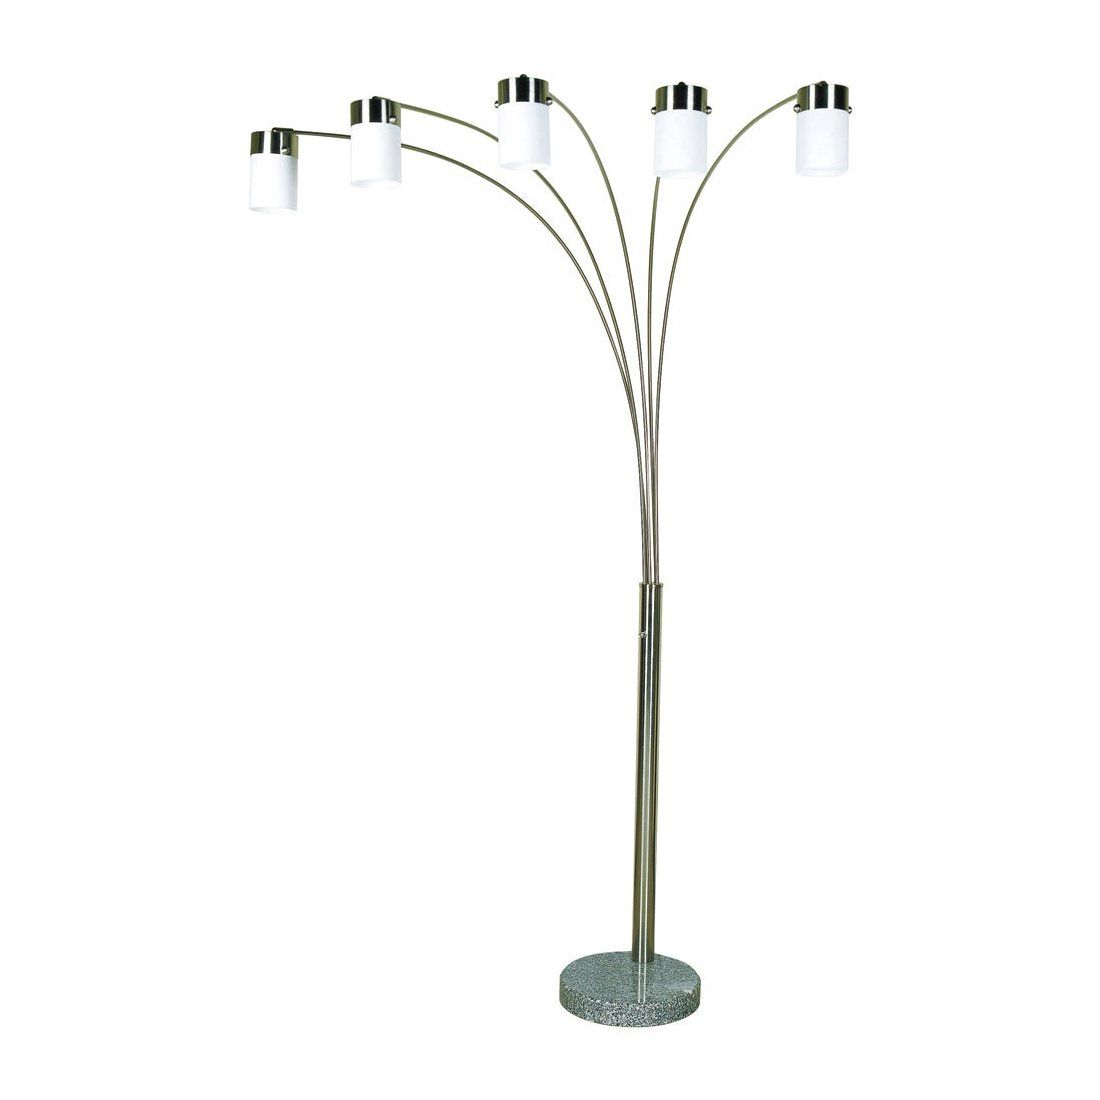 Ore International 3031f5w 5 Light Arch Steel Floor Lamp regarding measurements 1100 X 1100